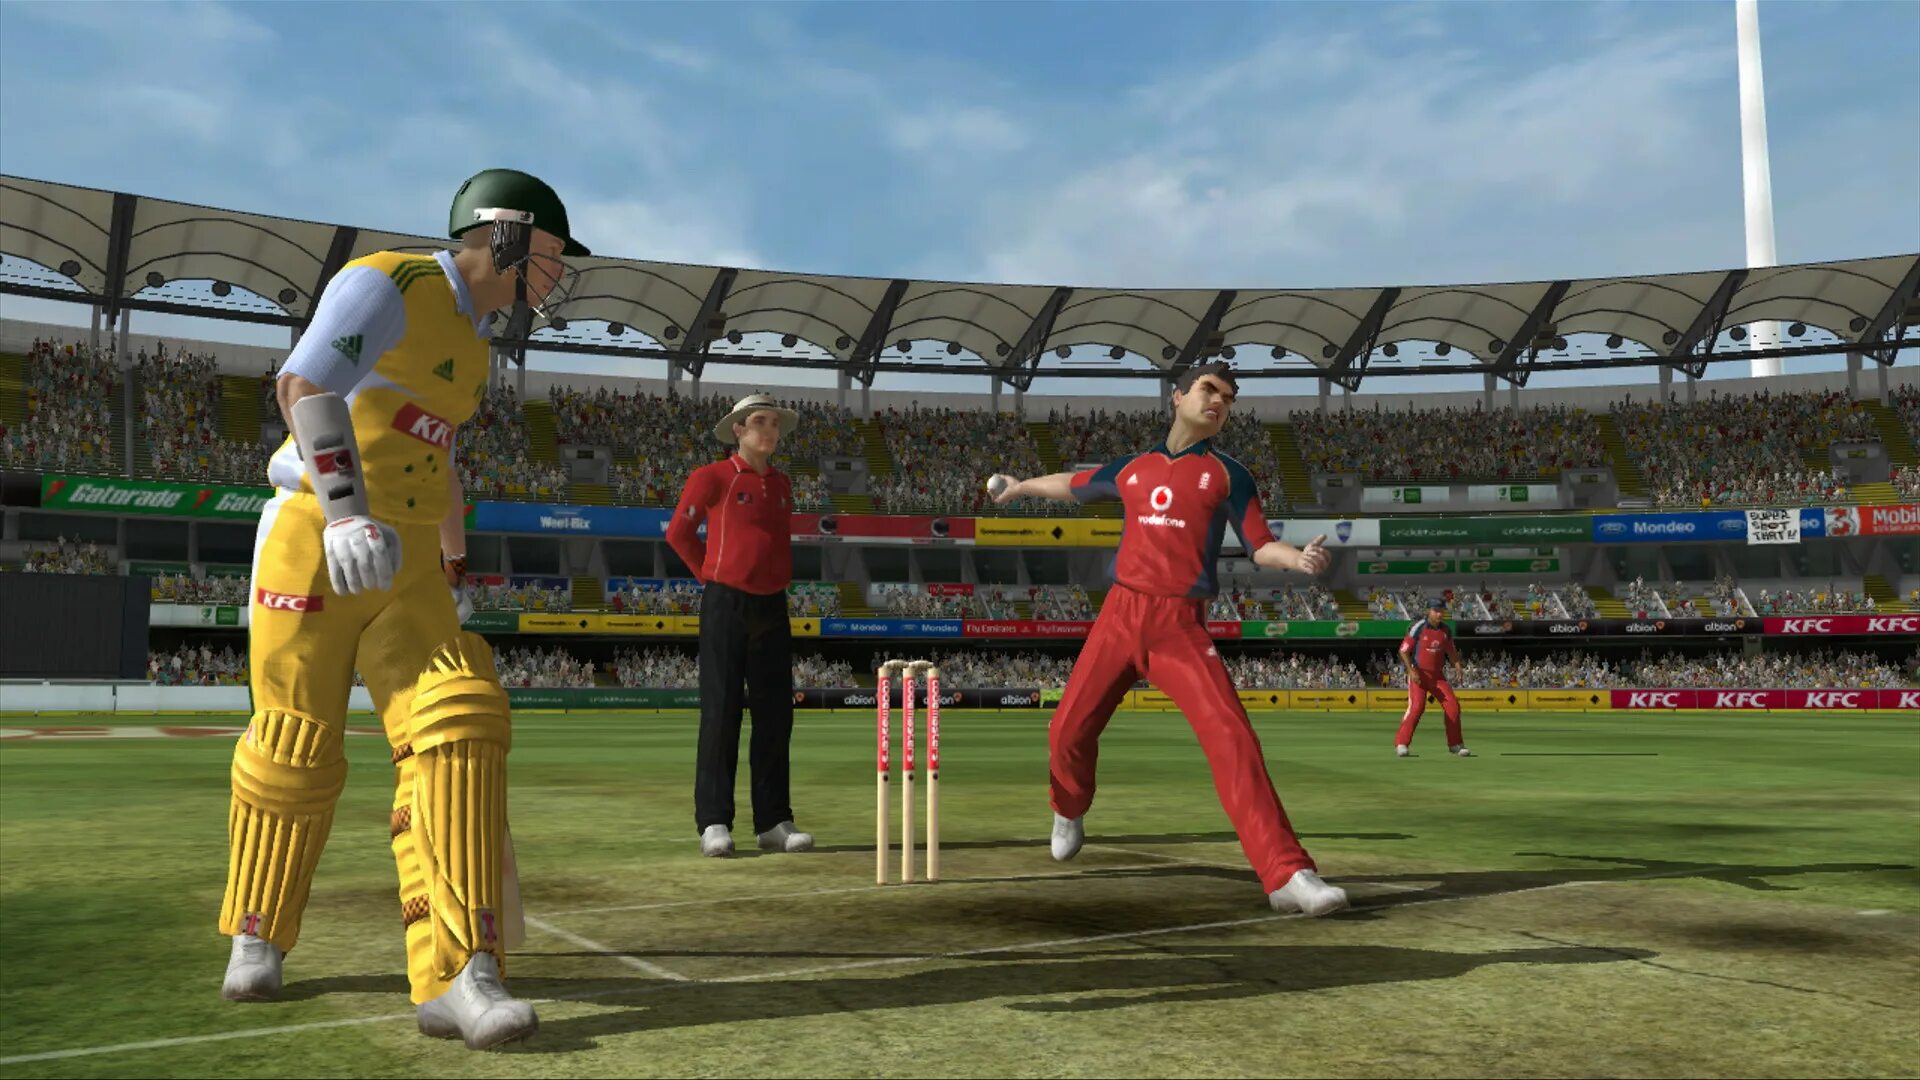 Ashes Cricket 2009 (Xbox 360). Cricket игра. Крикет игра на ПК. Player для игры. Local player game players localplayer